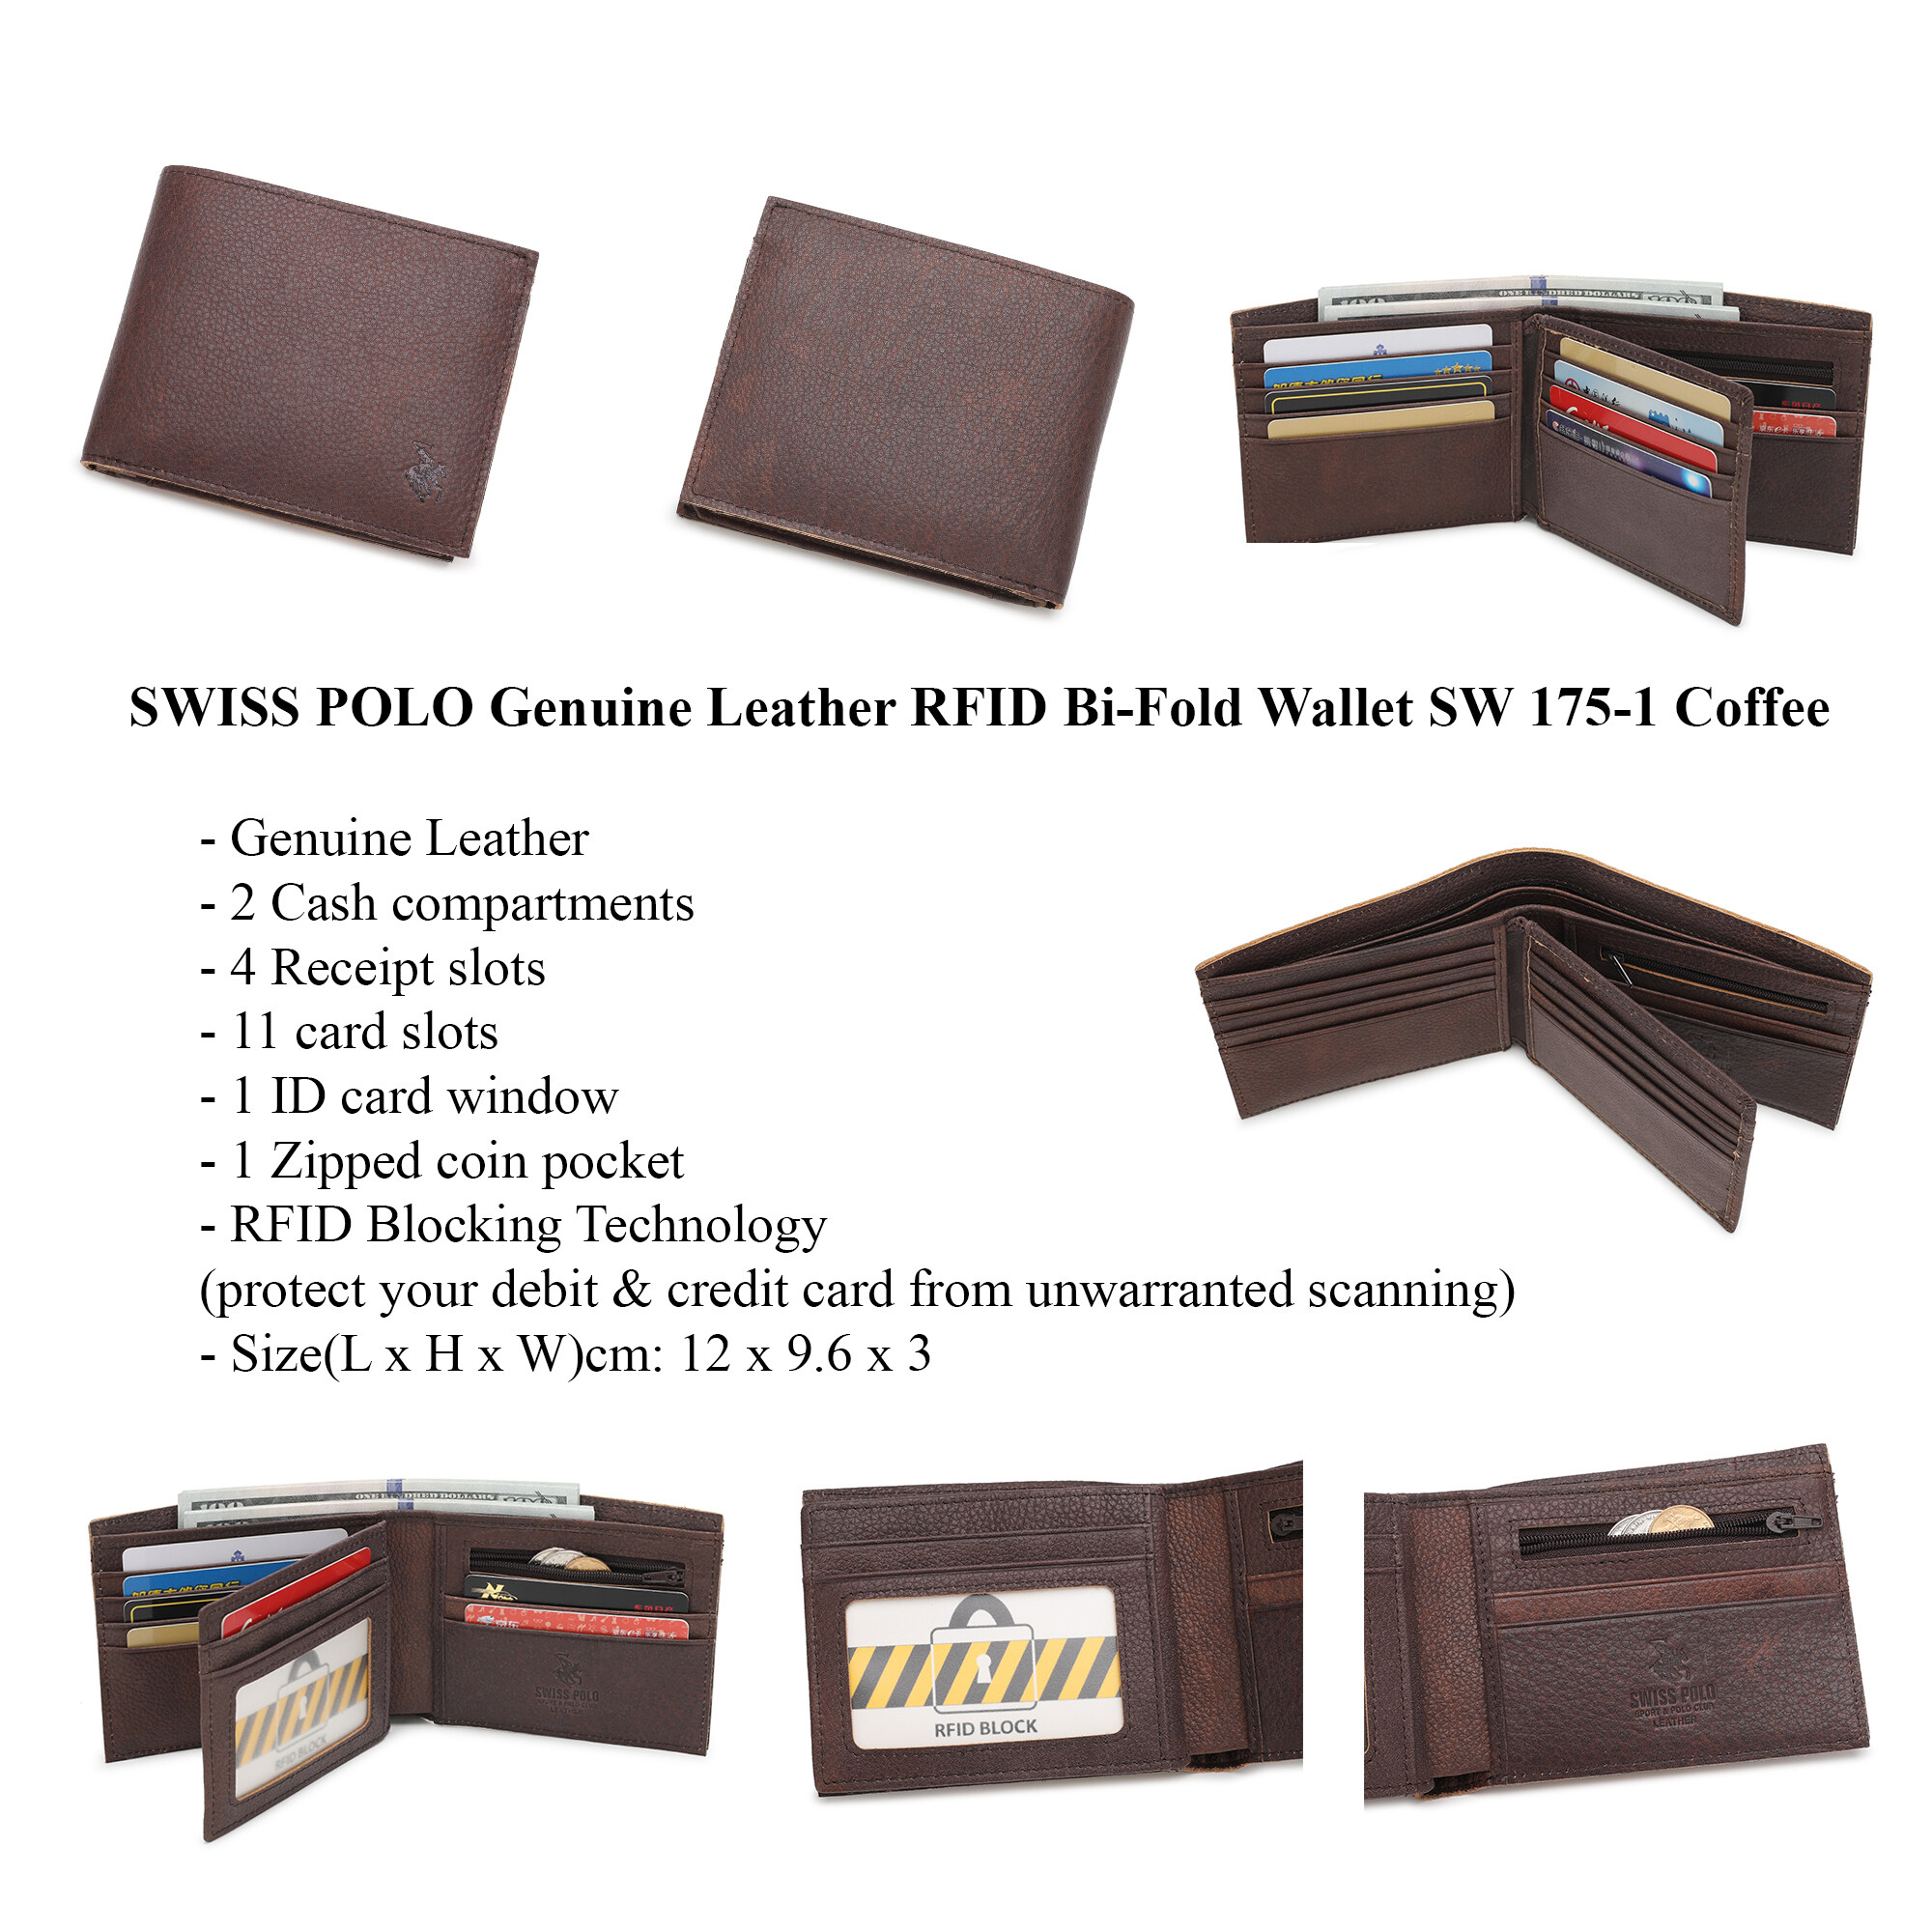 SWISS POLO Genuine Leather RFID Short Wallet SW 175-1 COFFEE